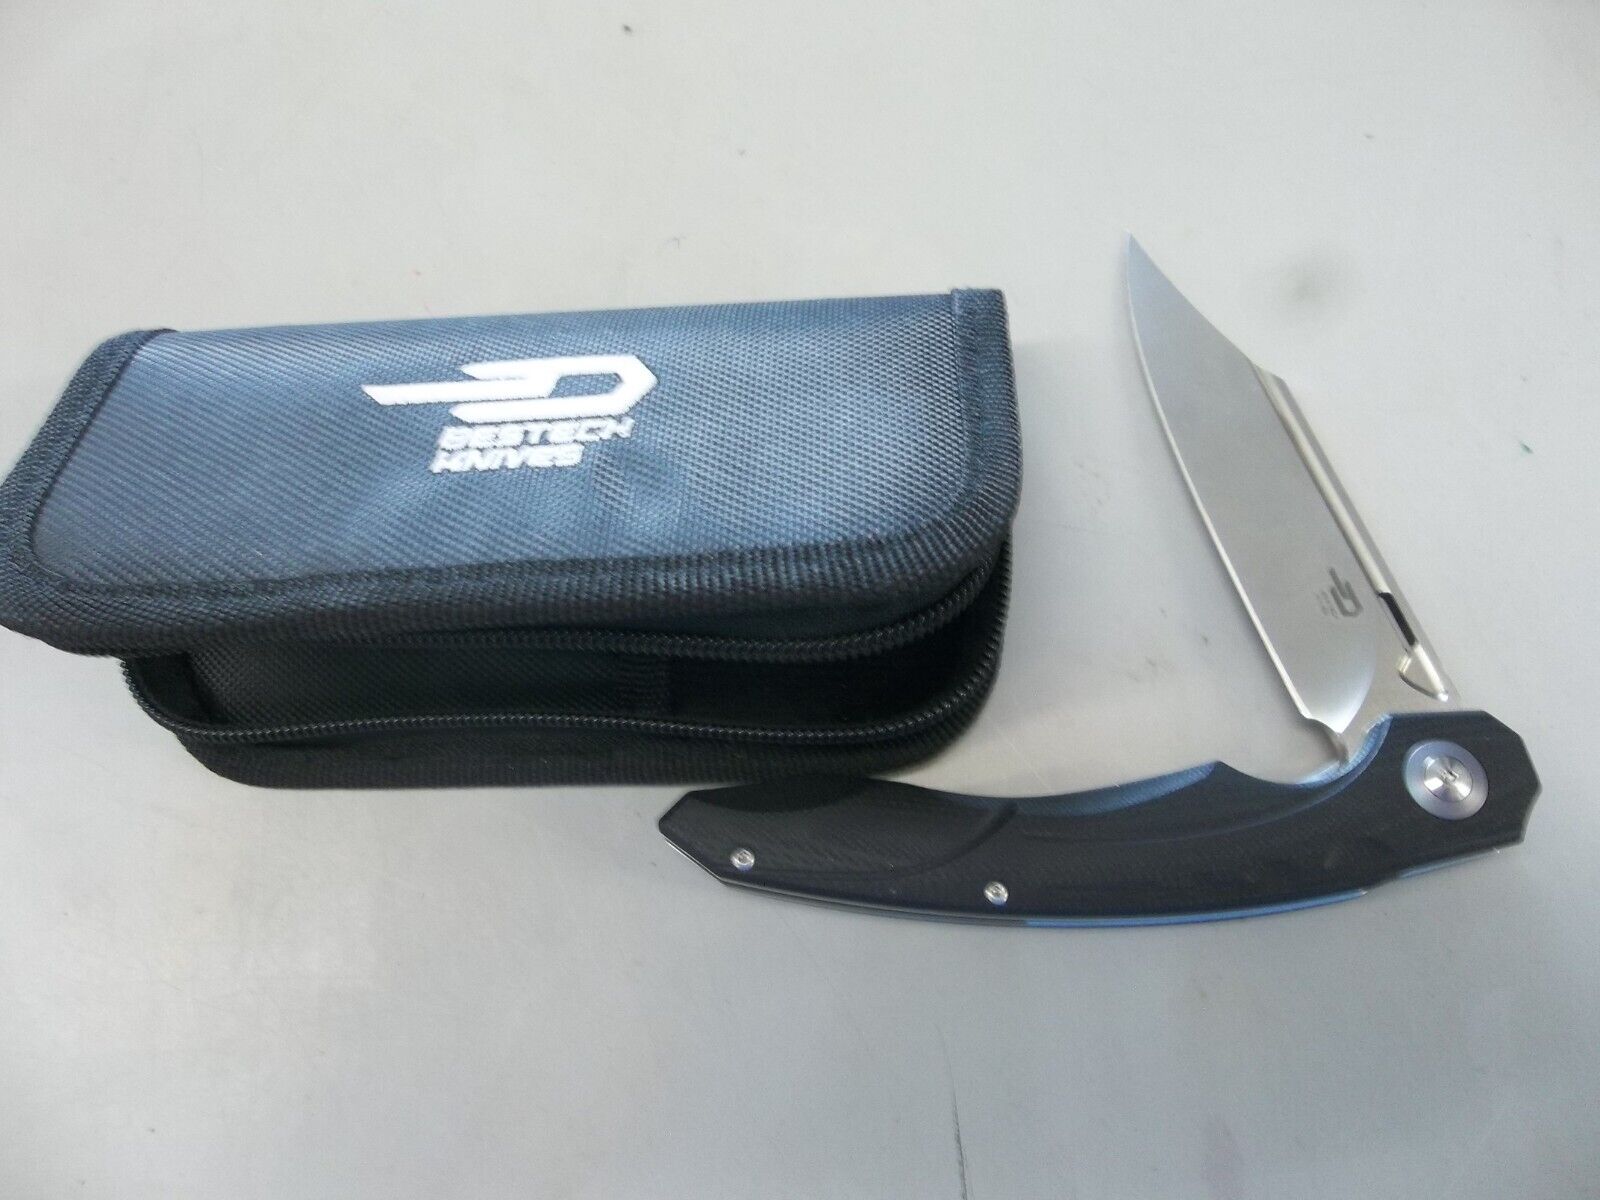 Bestech BG18A Fanga Kombou Design black handle pocket knife w/ case